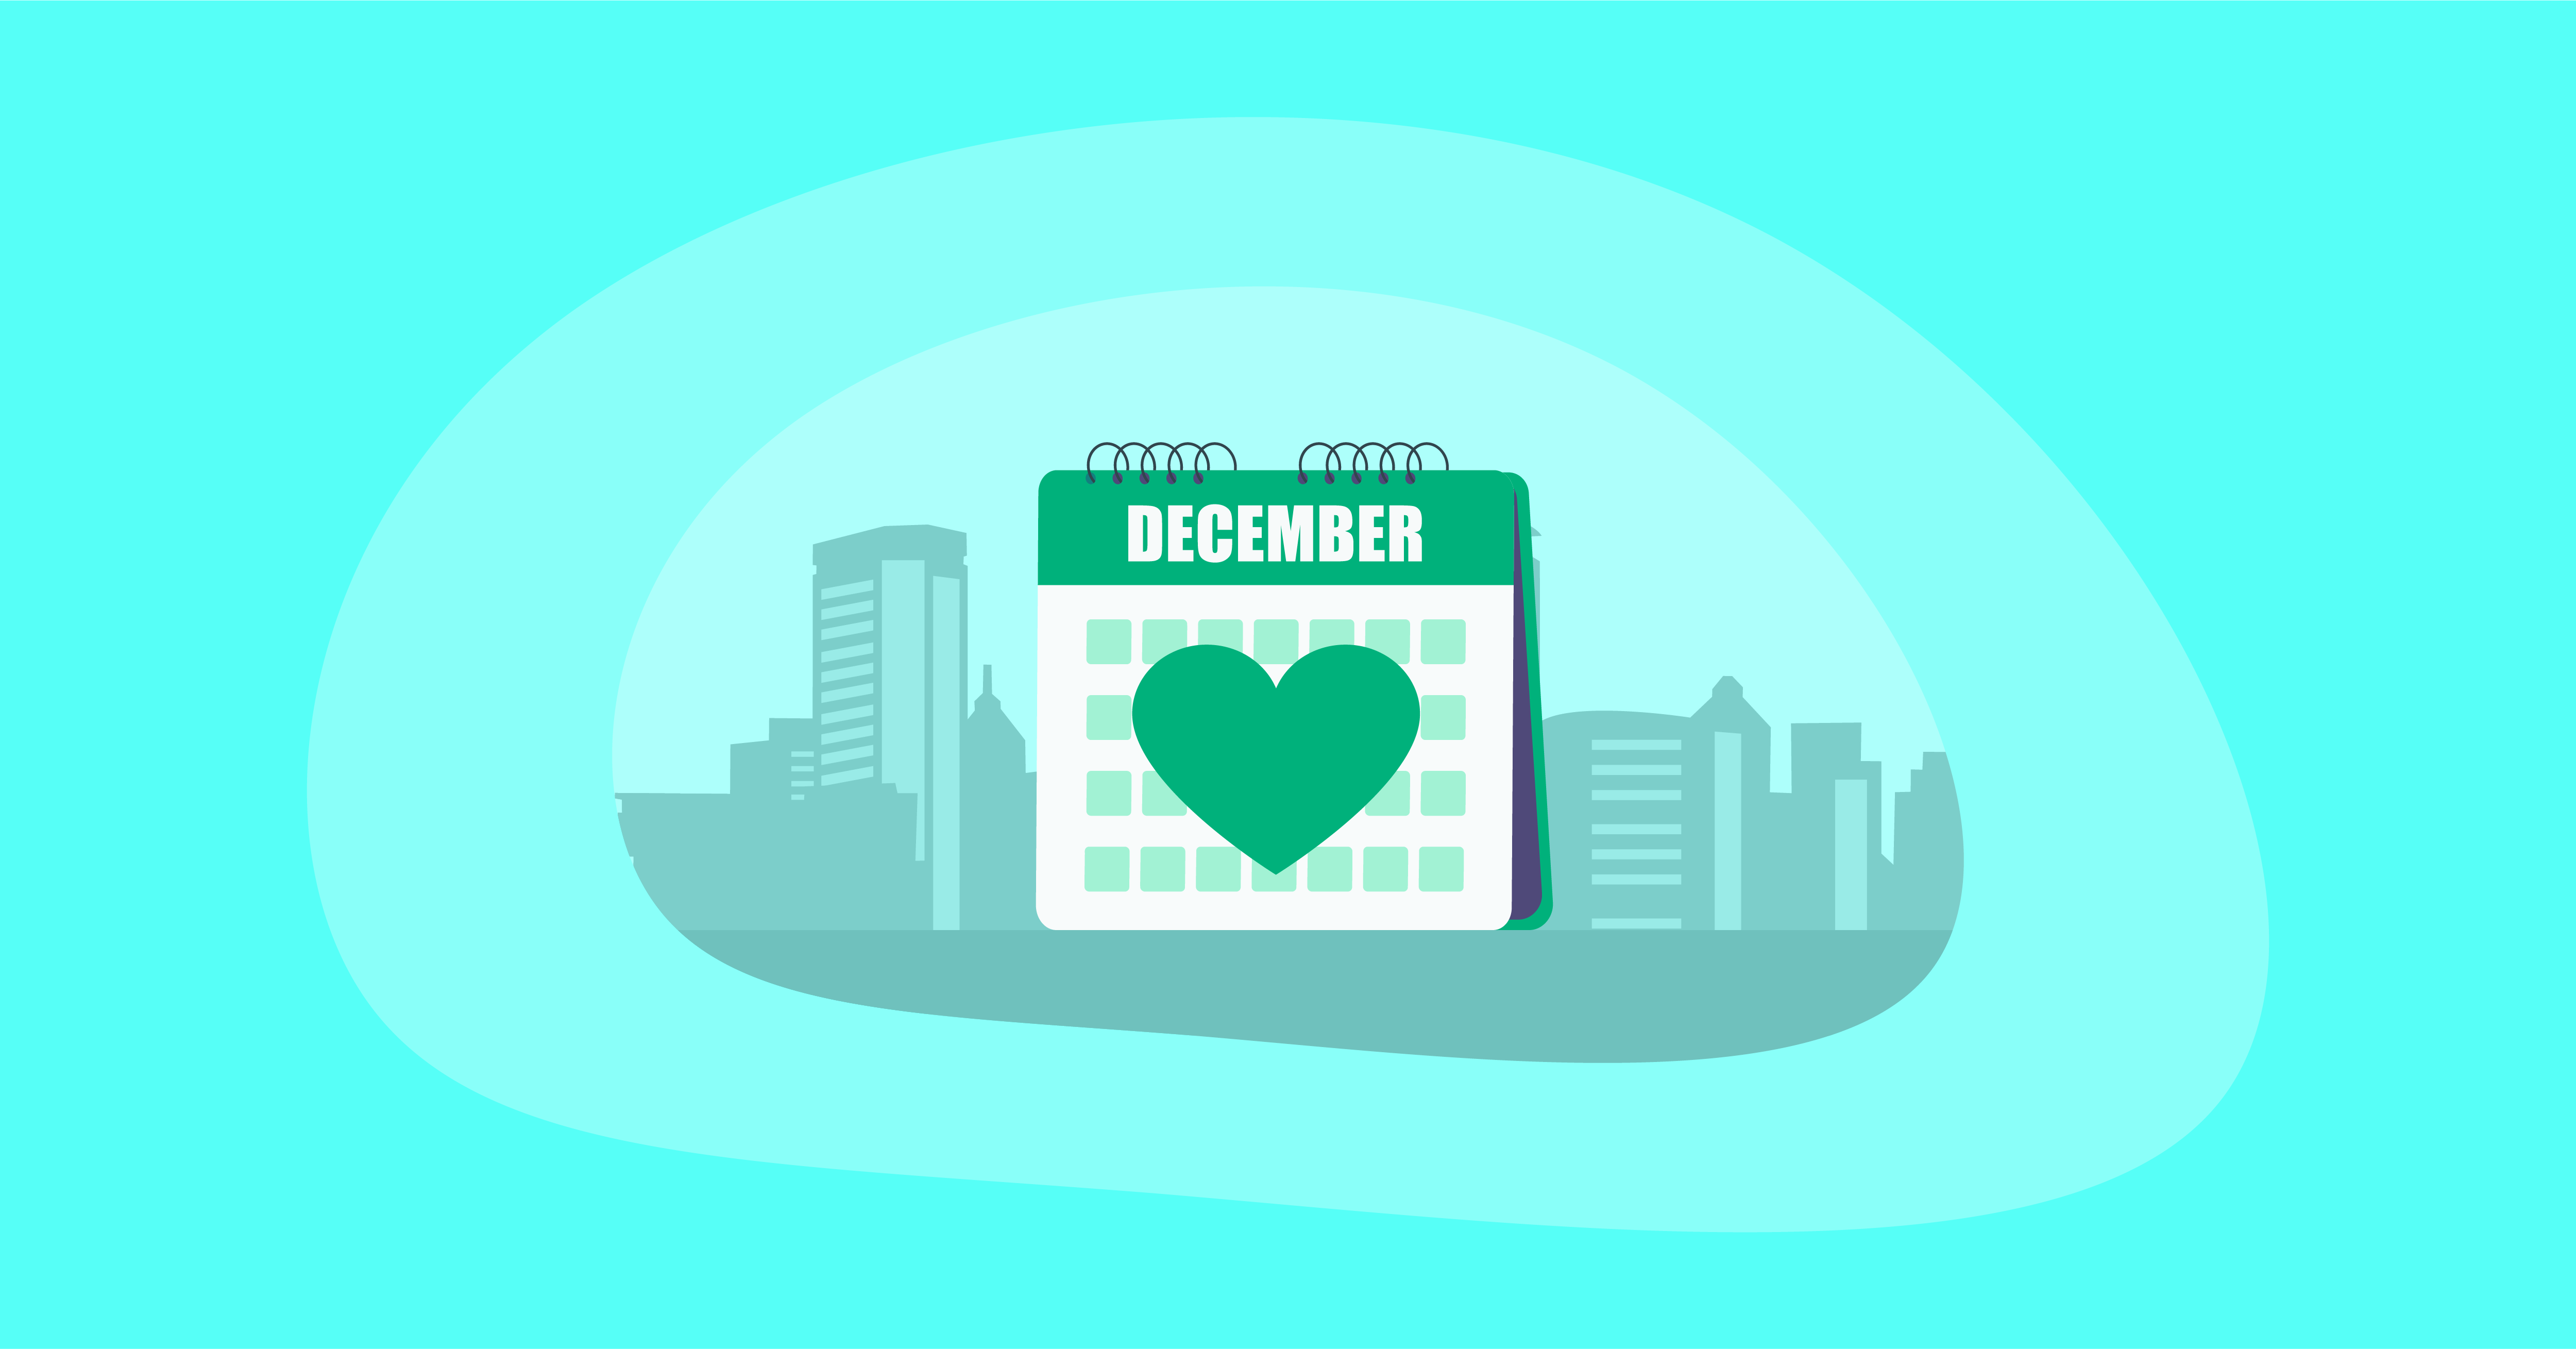 Illustration of an awareness calendar for December